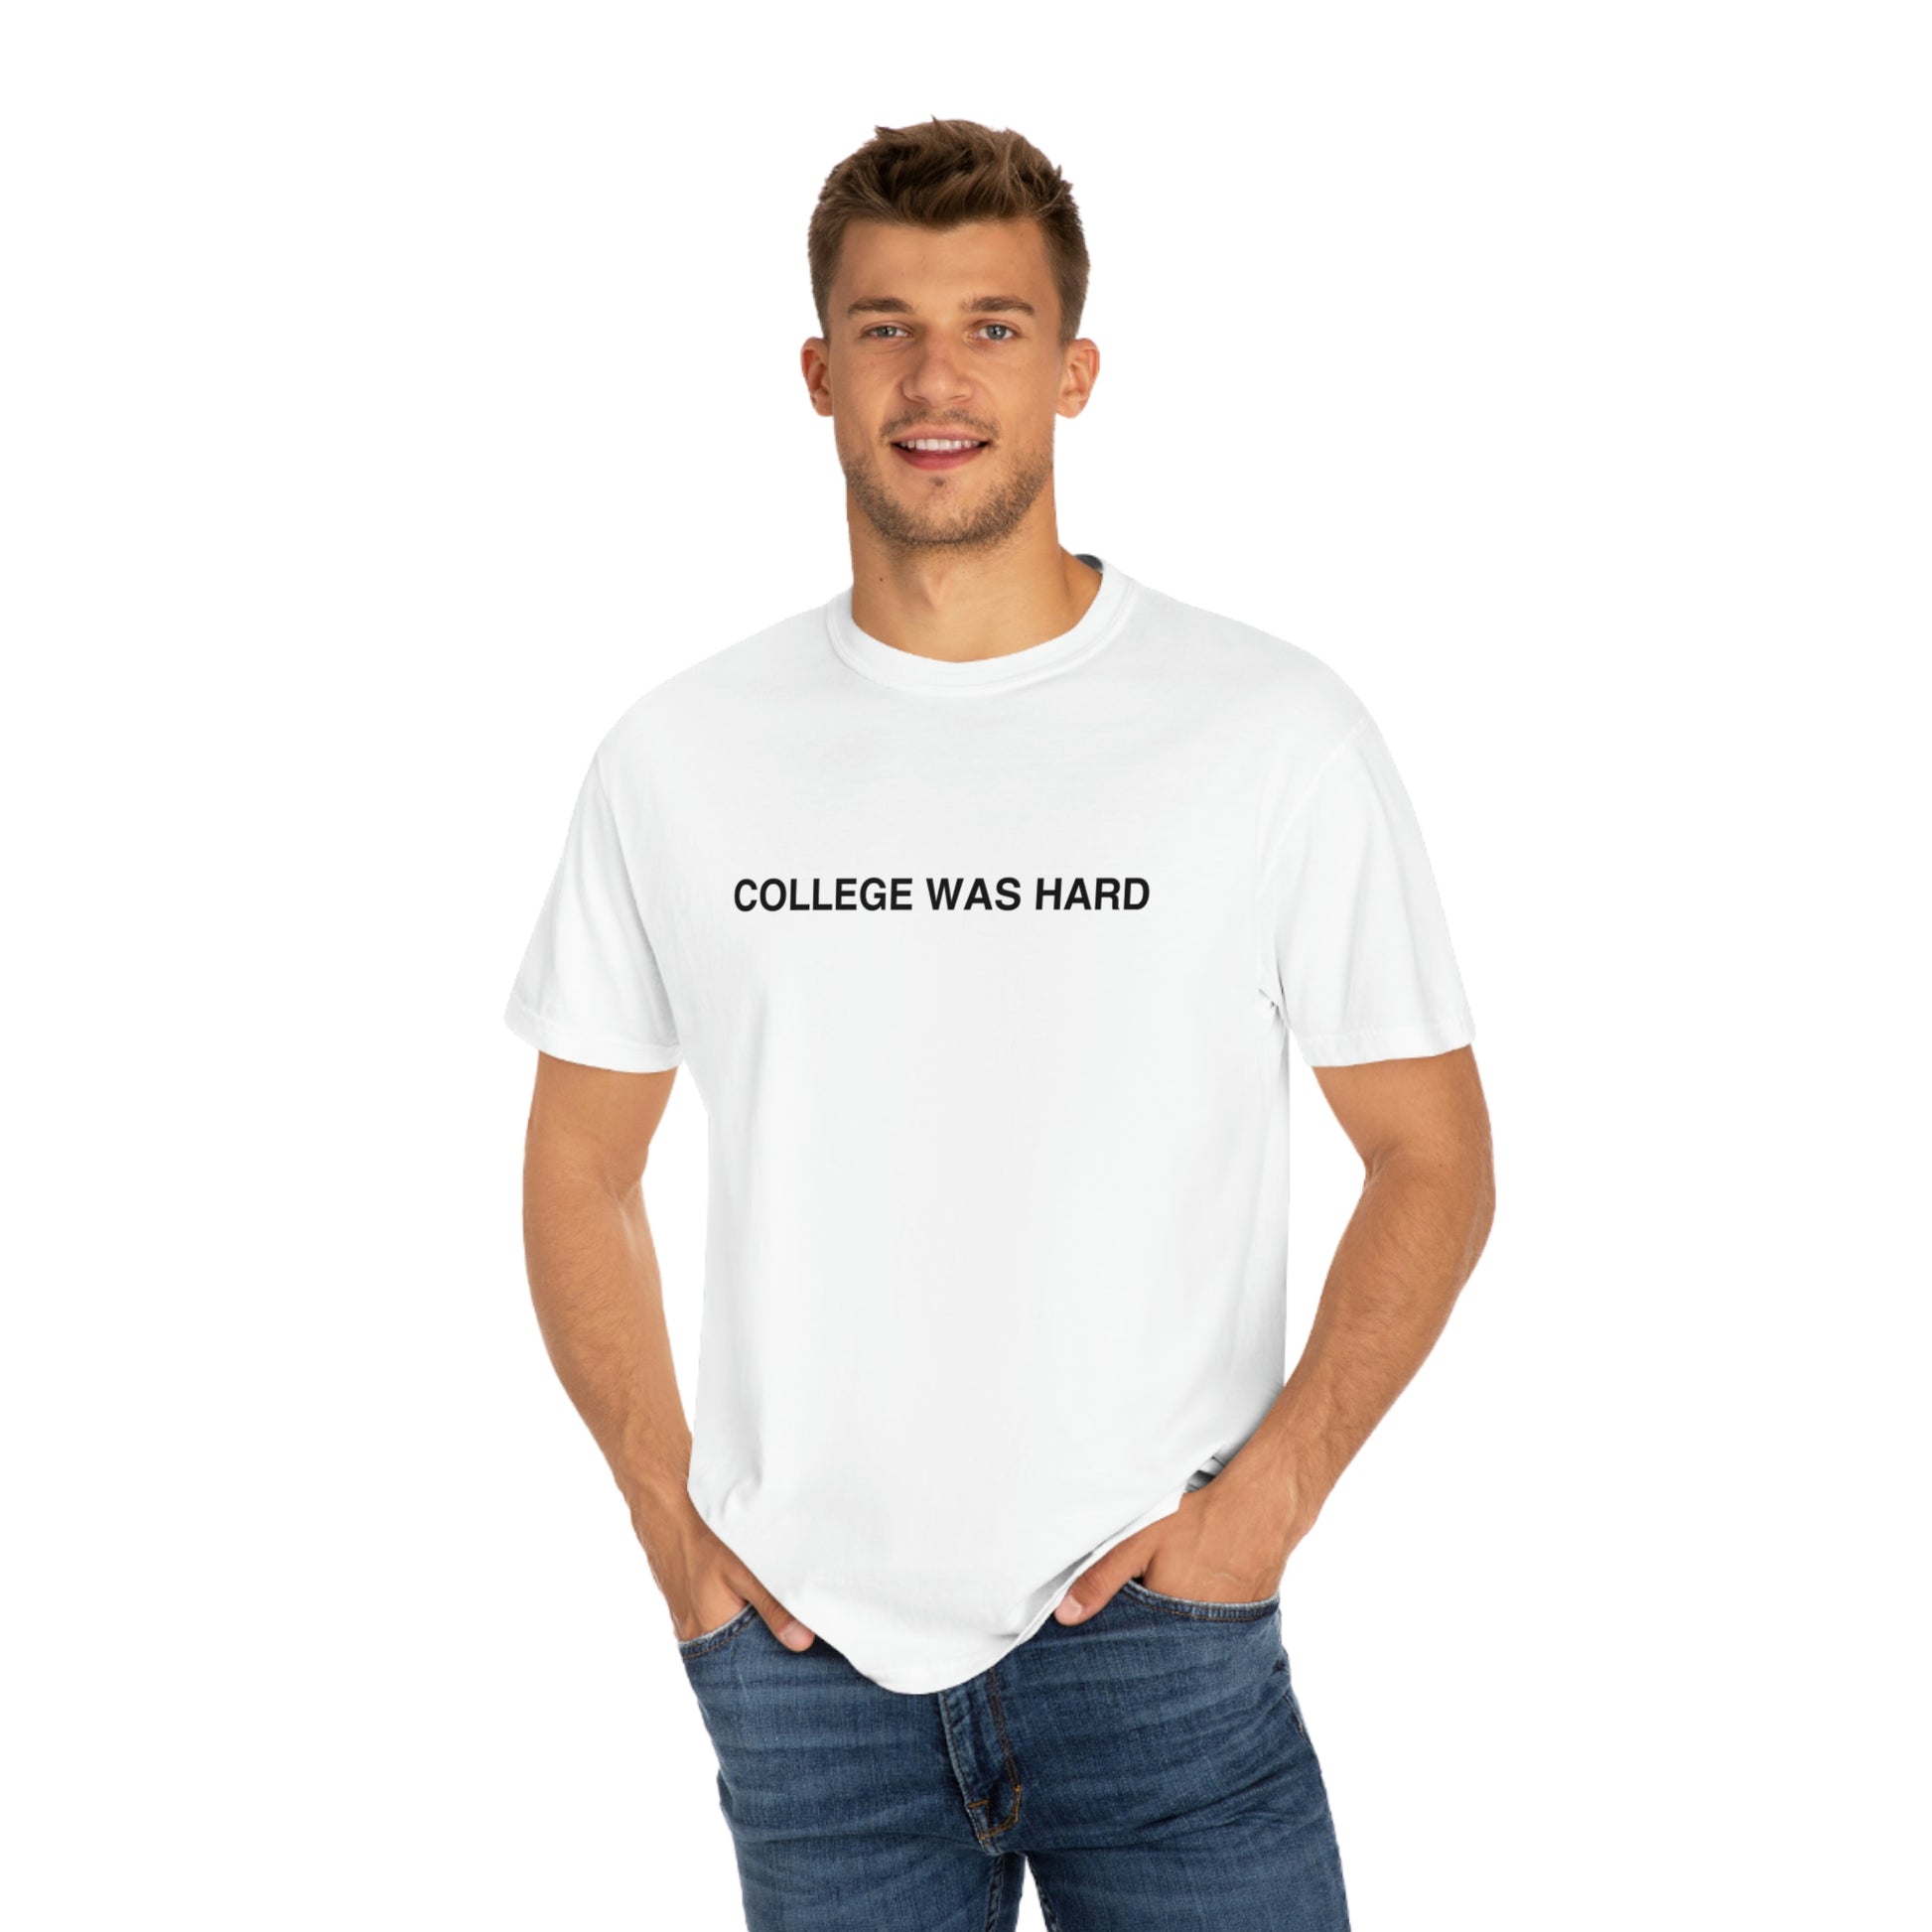 COLLEGE WAS HARD t-shirt